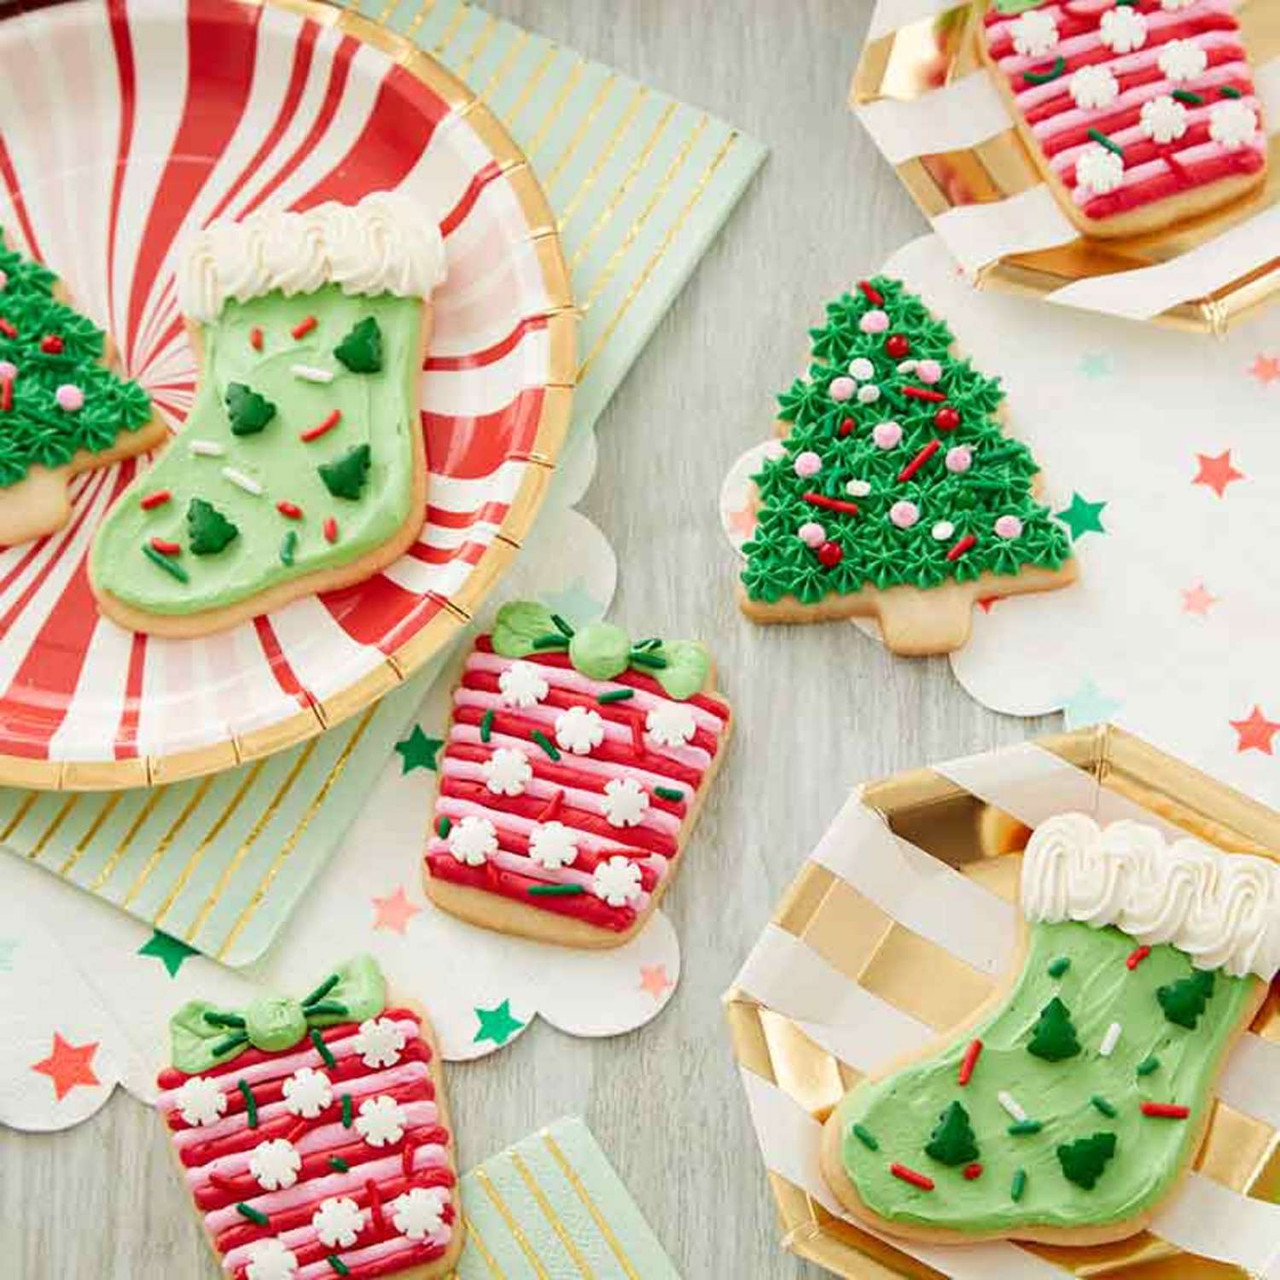 DIY Sugar Cookie Room Spray for a Festive Holiday Season